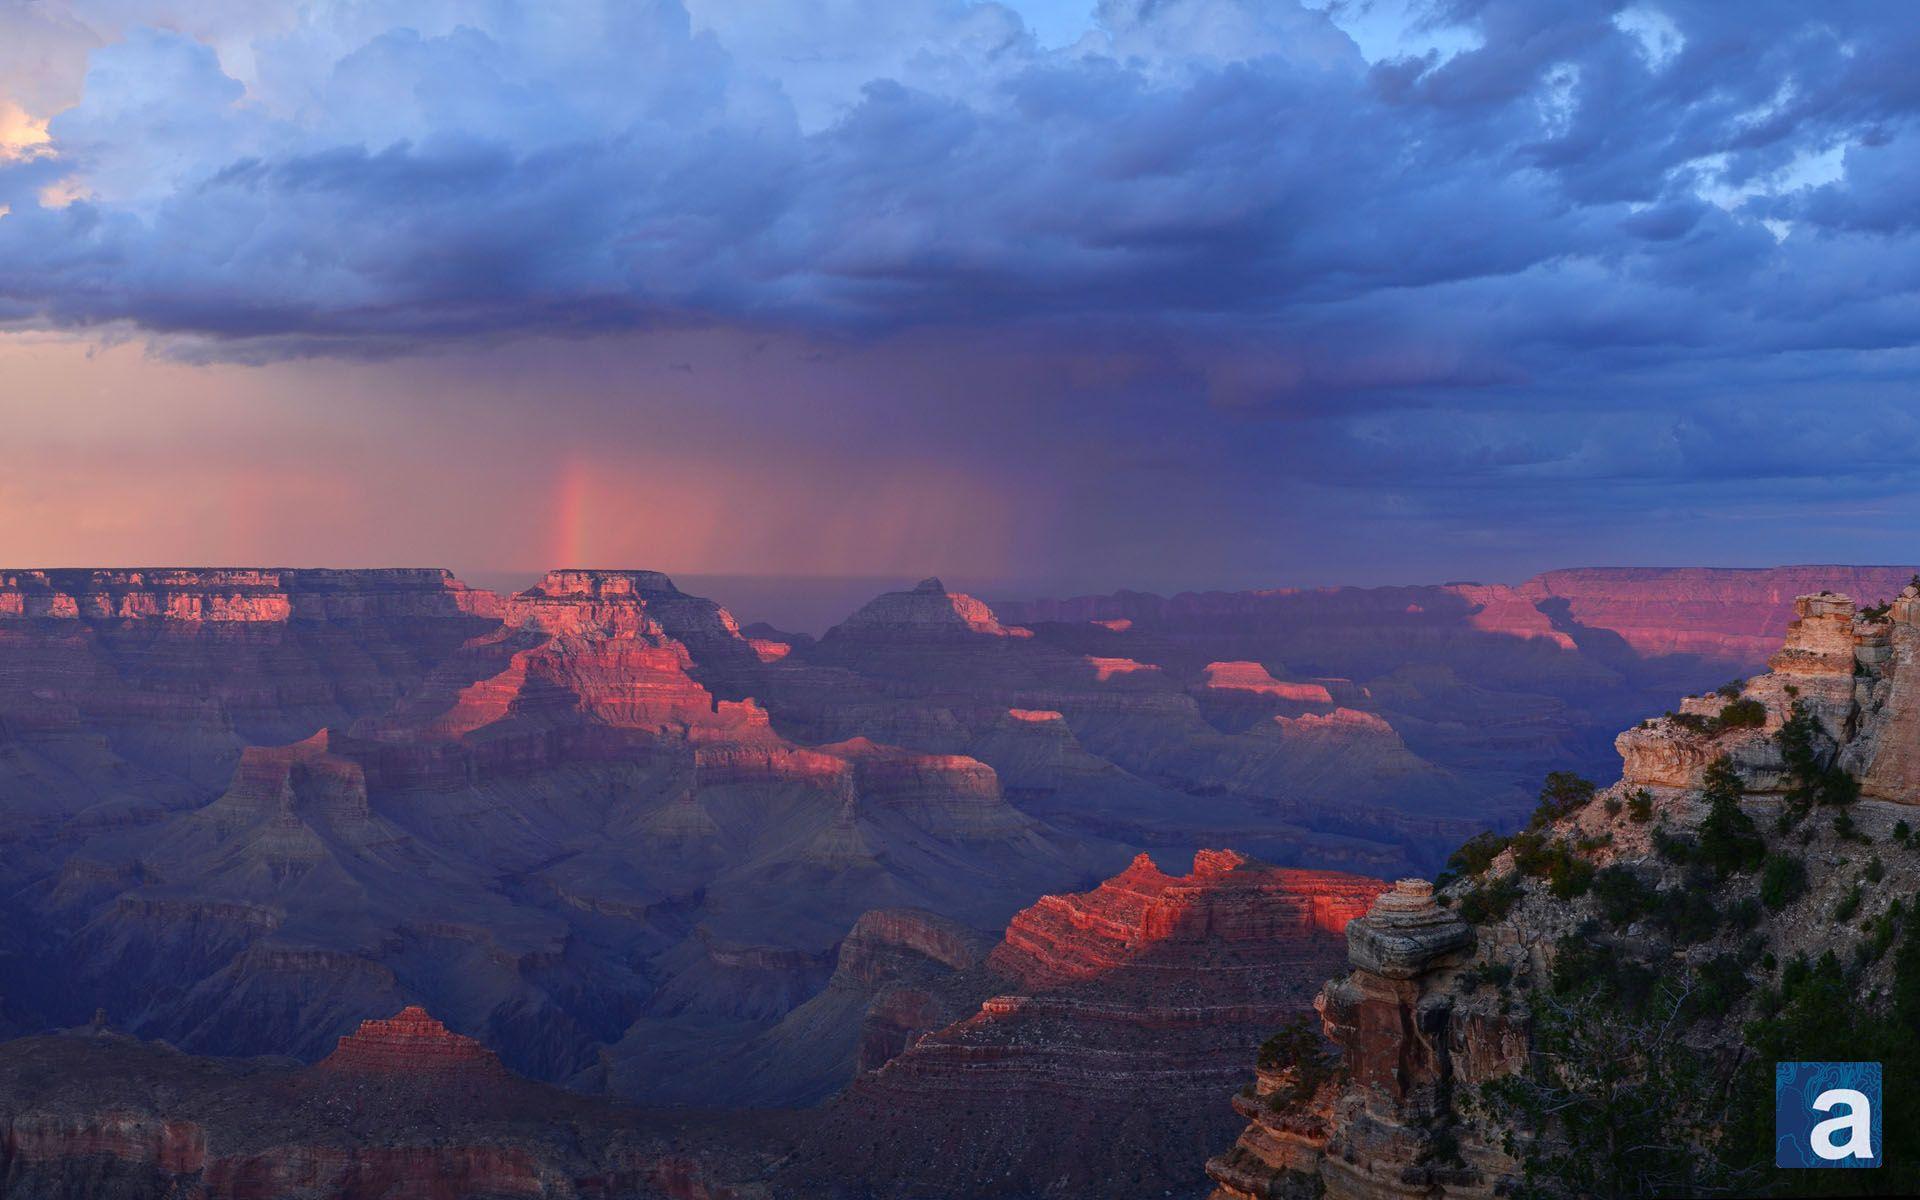 Wallpaper Wednesday: Grand Canyon Sunset